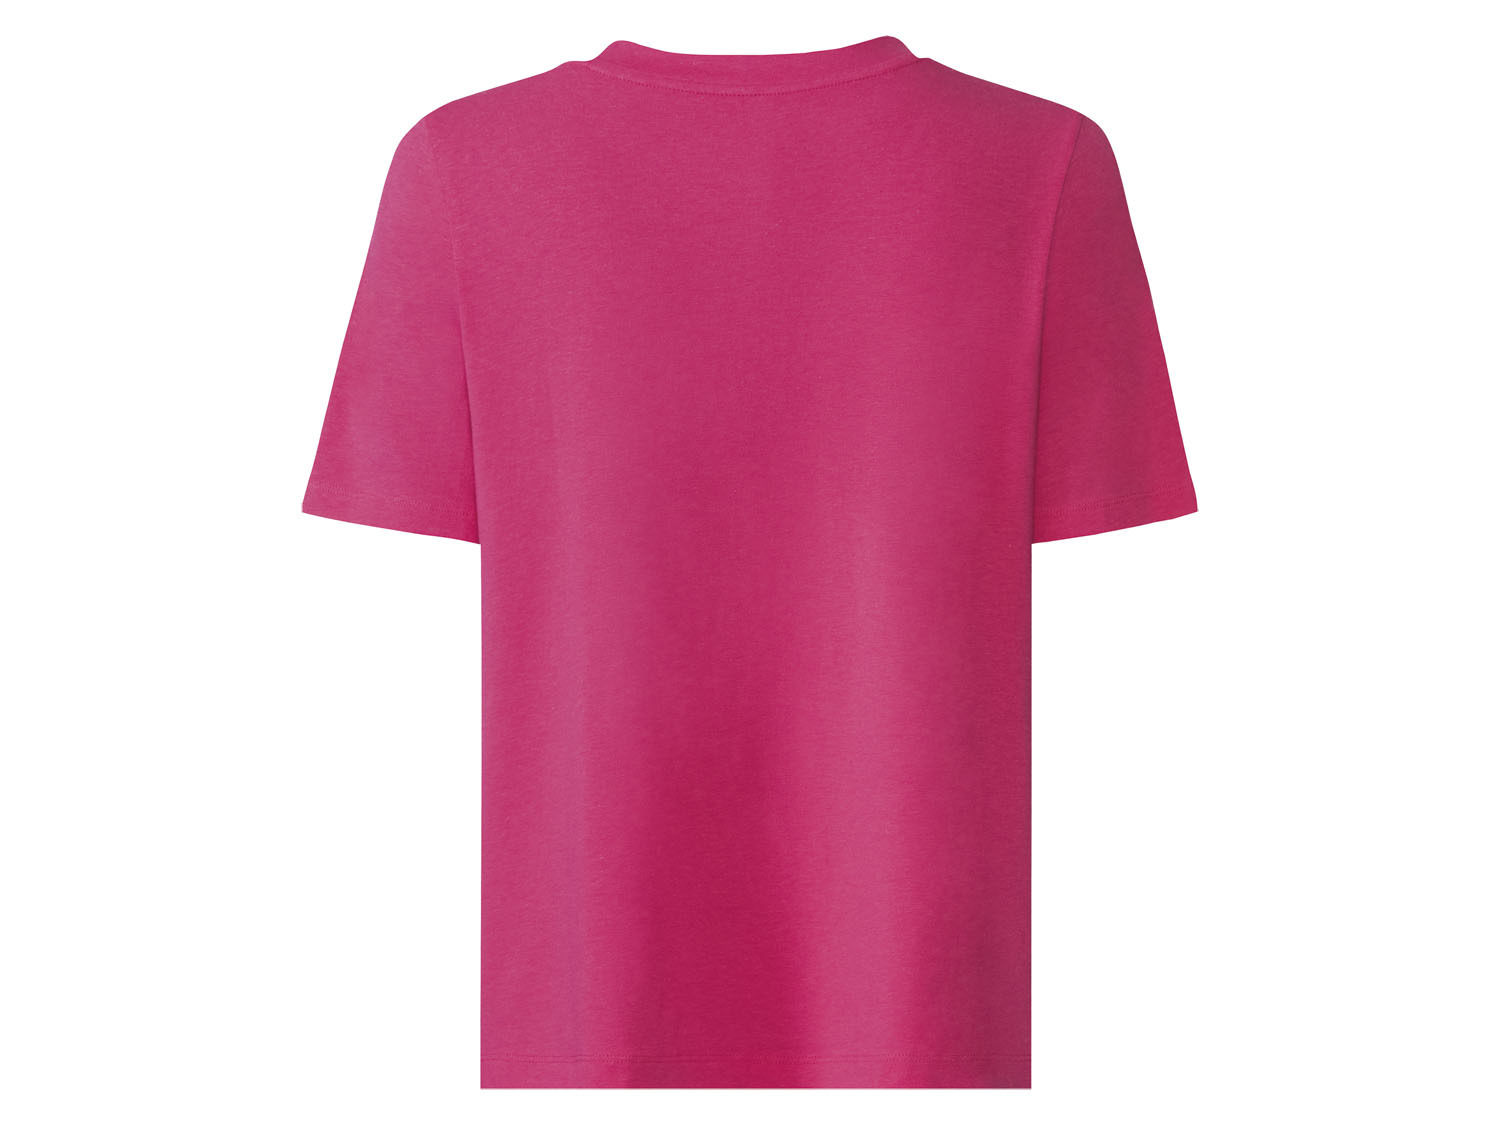 Damen Tshirt LIDL Limited Edition M - .de